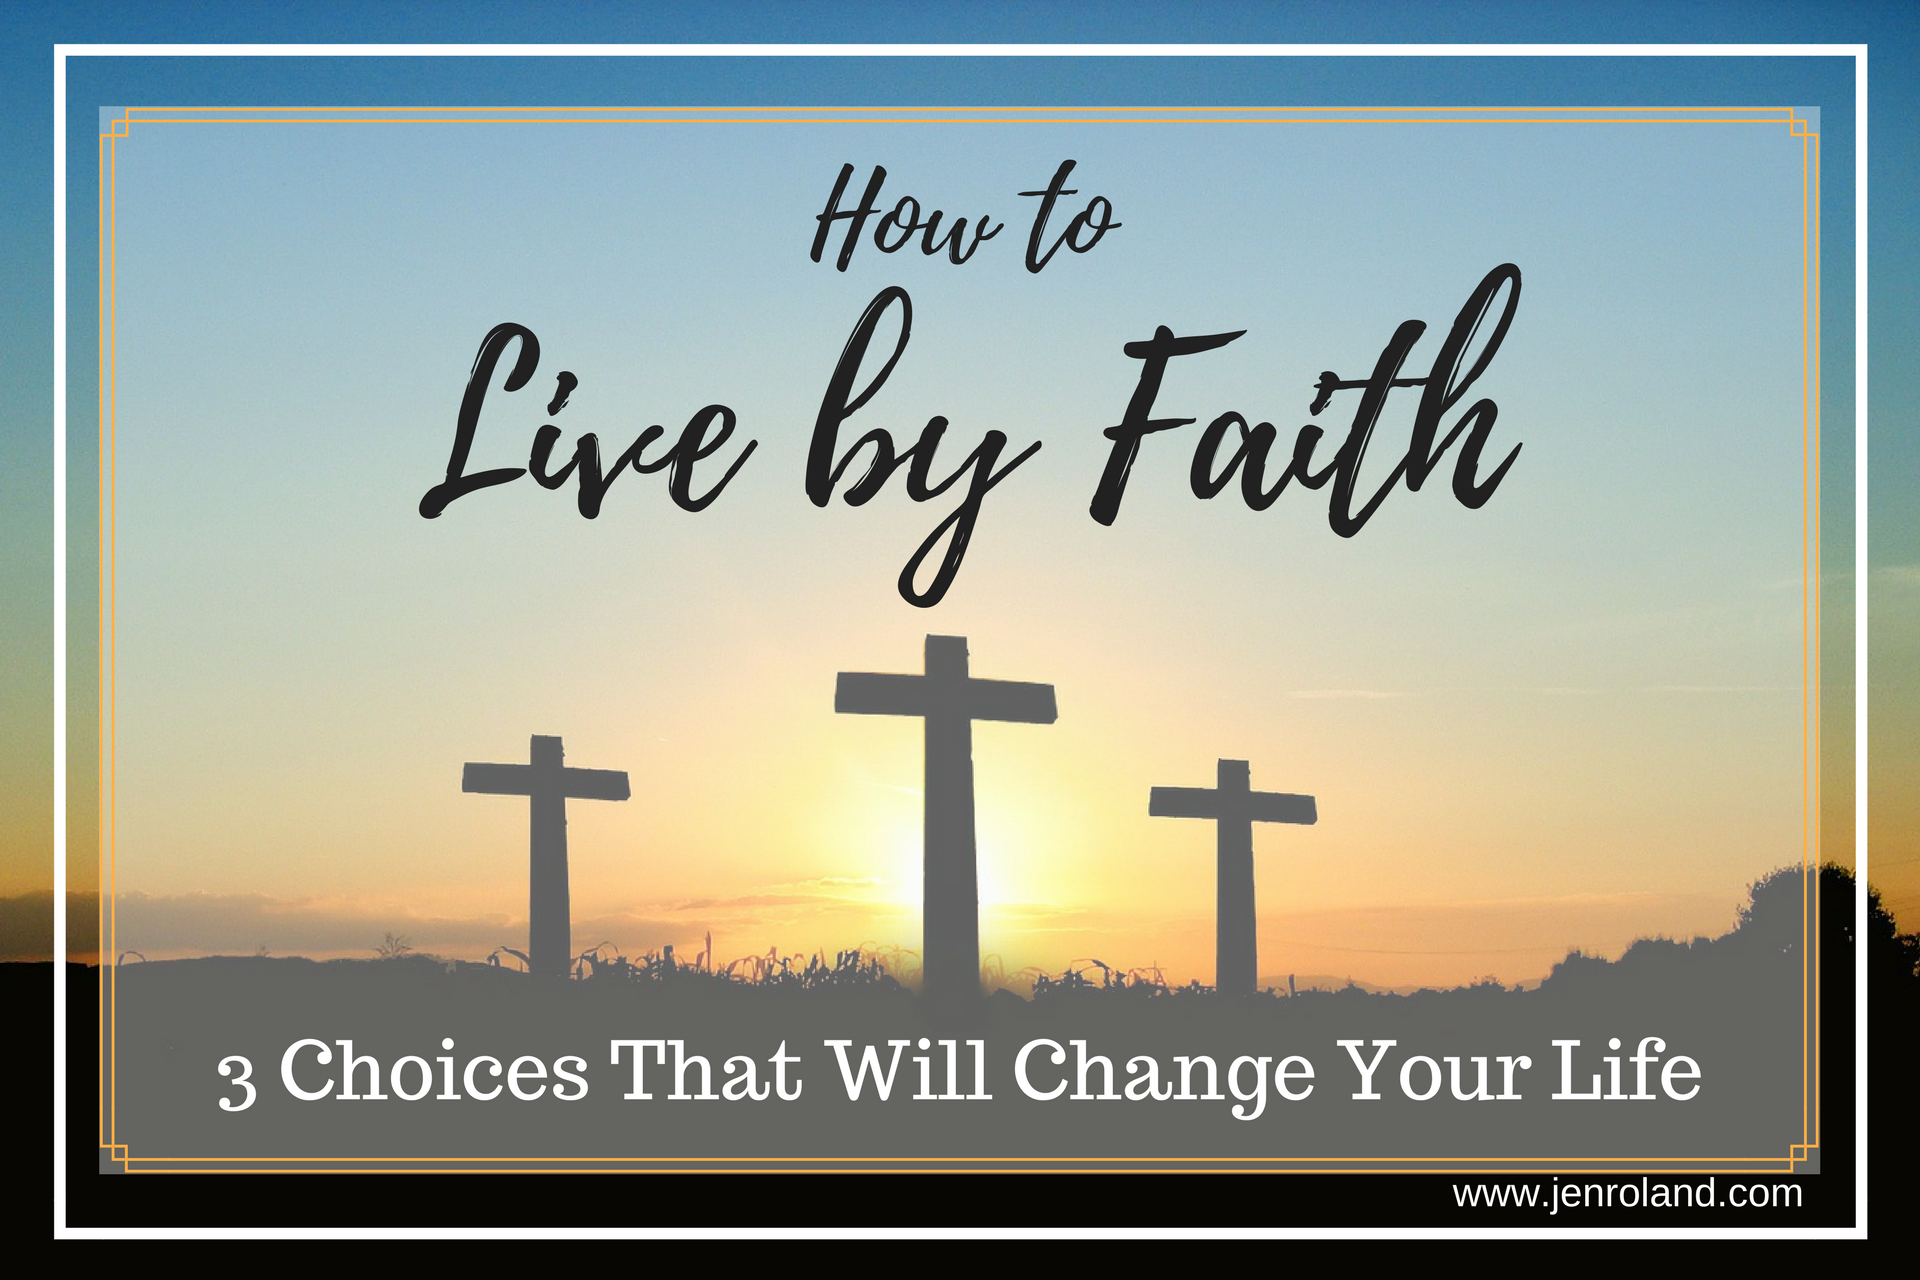 creative presentation of how you live your faith